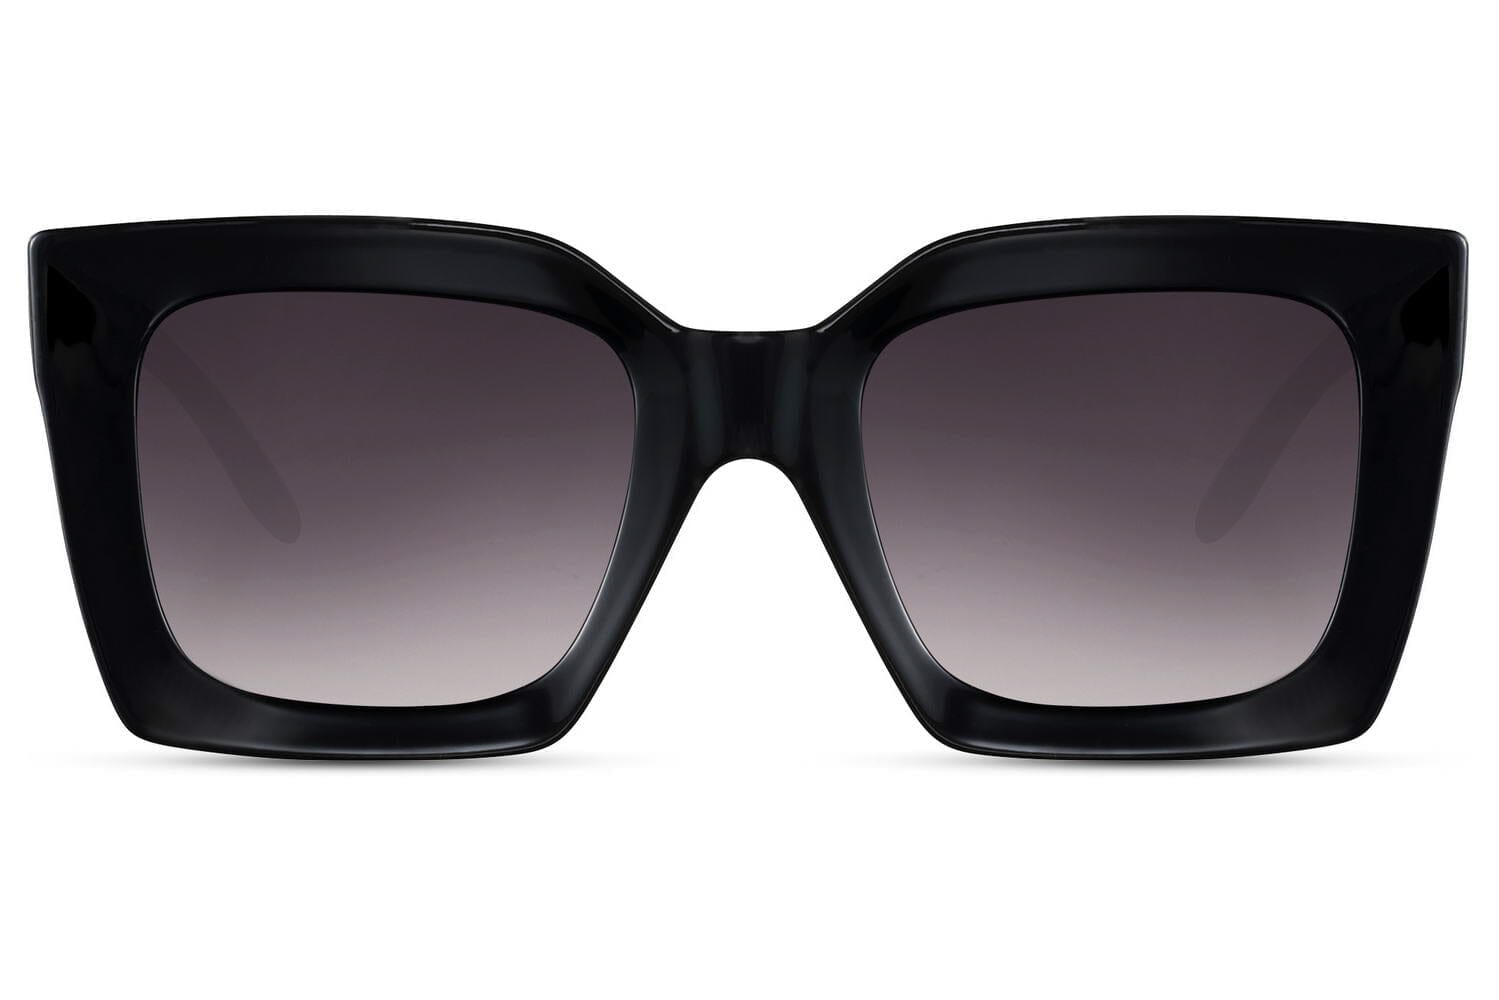 Black vintage sunglasses. UV400 protected. Black acetate. Gradient lenses.